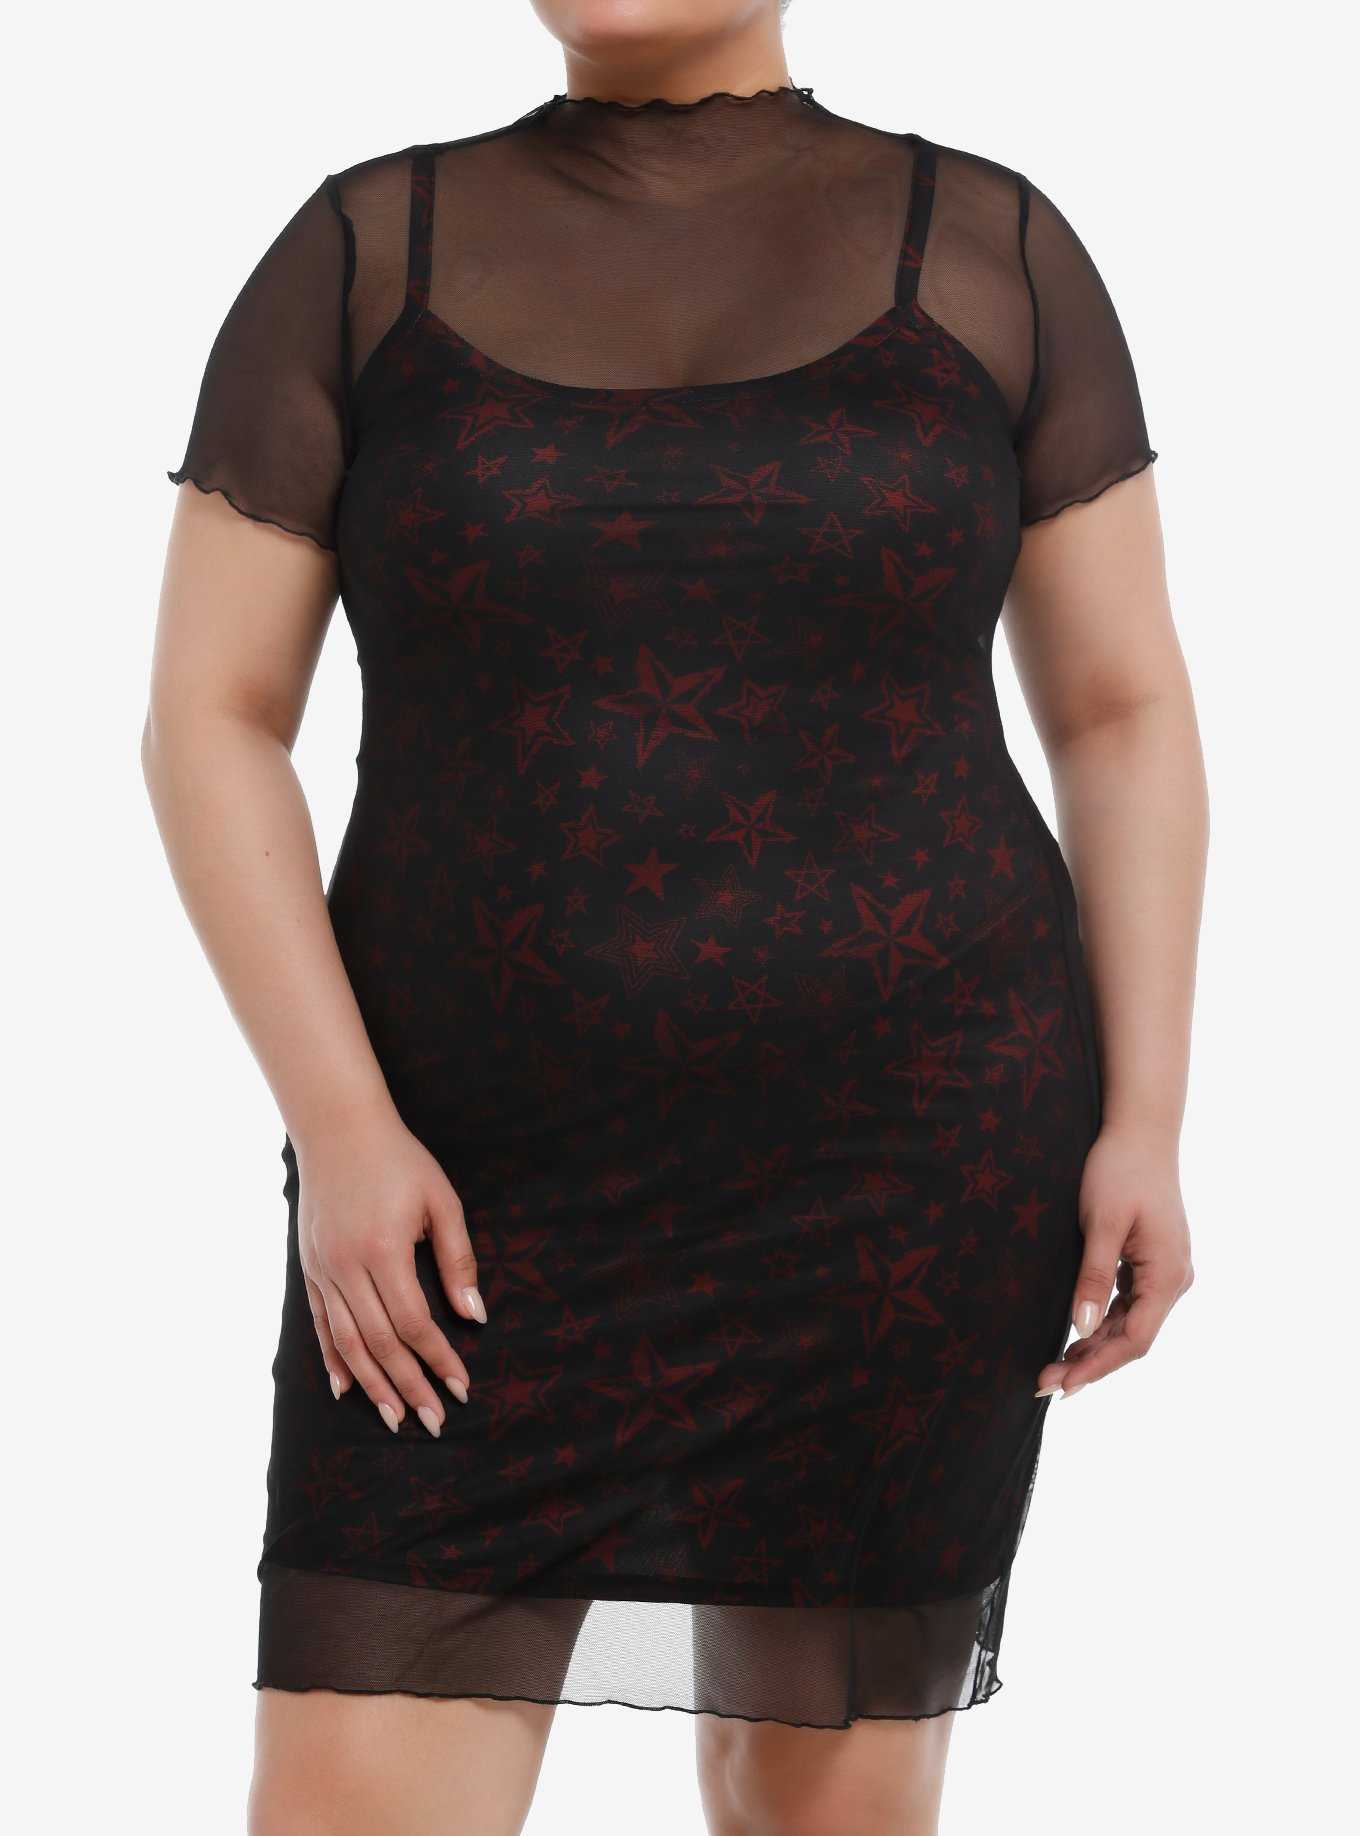 Gothic Dress Women's Dress Plus Size lace Autumn Dress Strapless Long  Sleeve Kawaii Black Dress